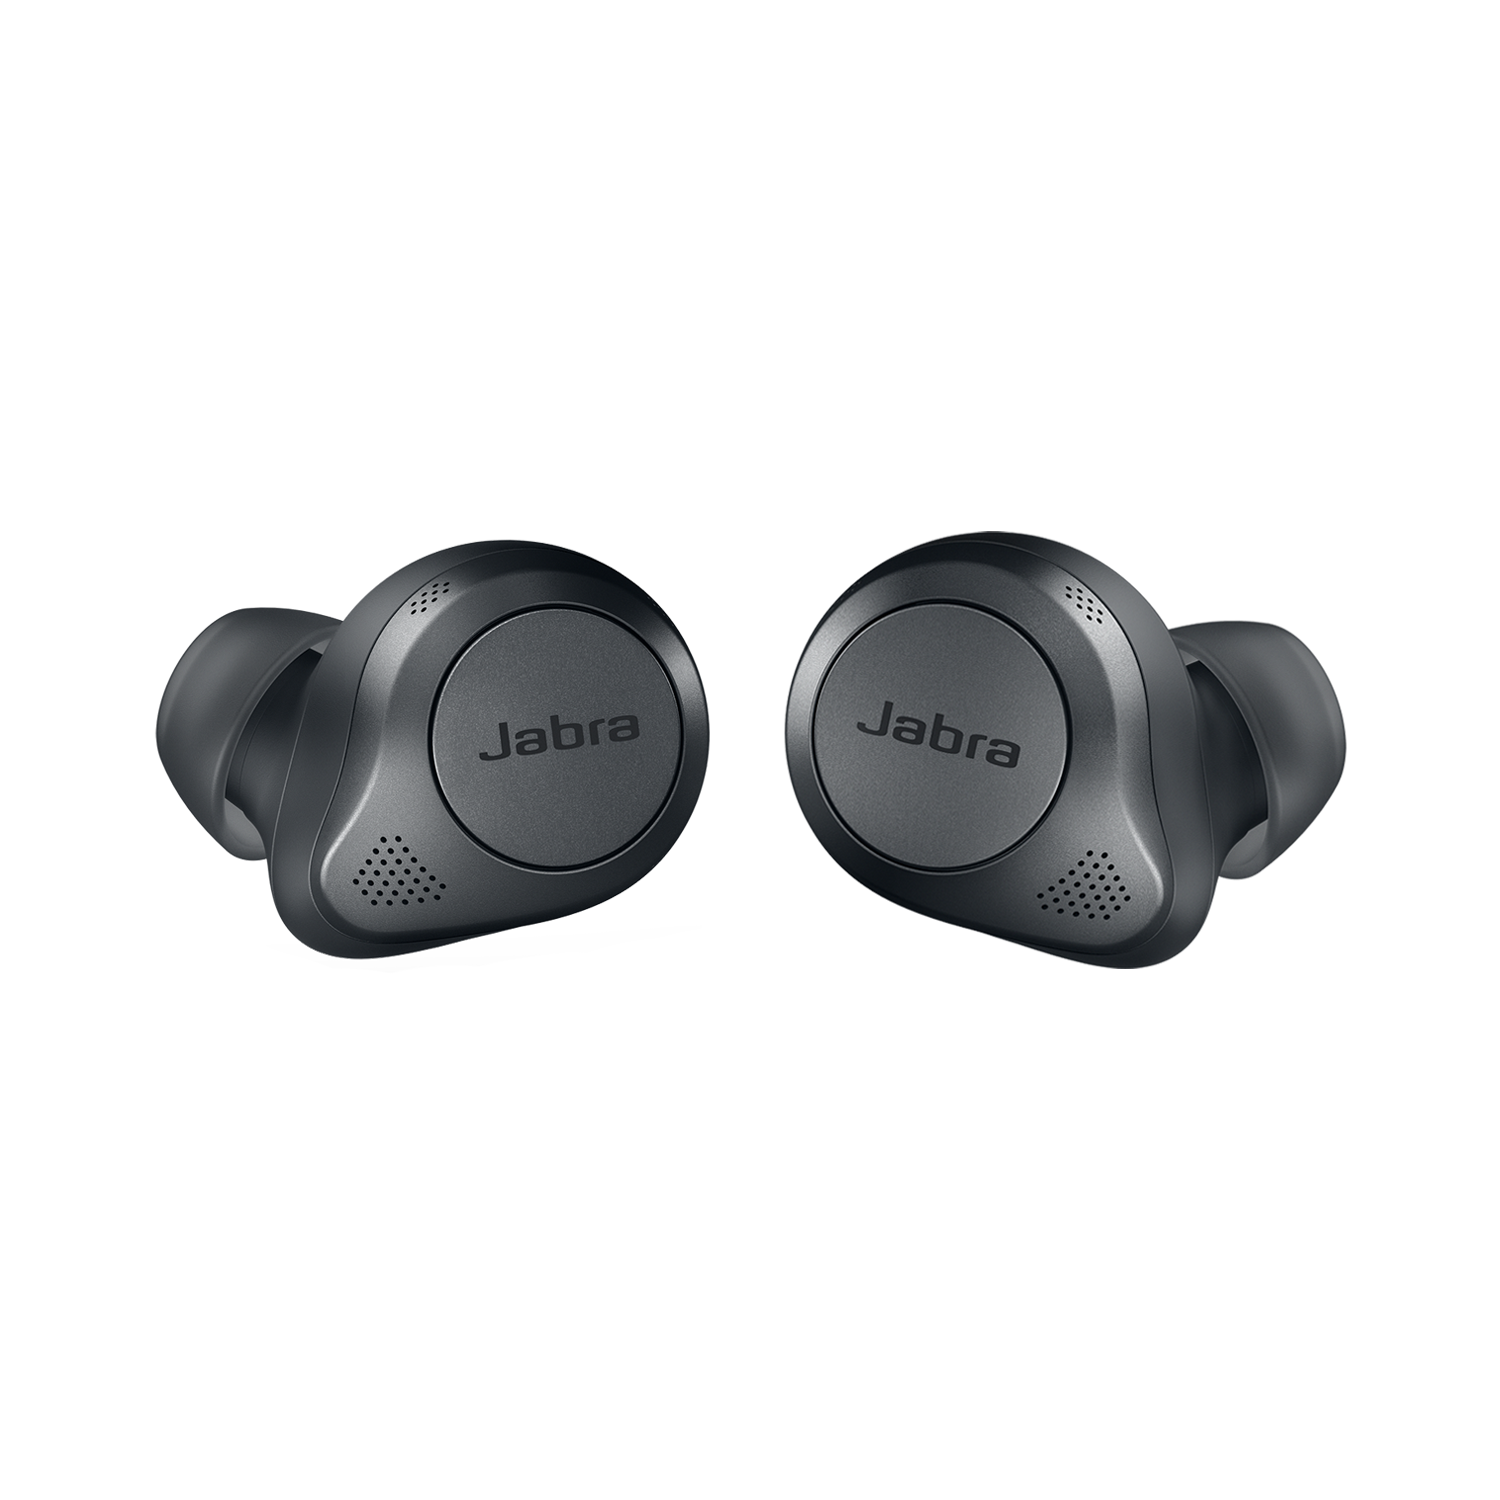 Jabra Elite 85t Replacement Earbuds - Grey